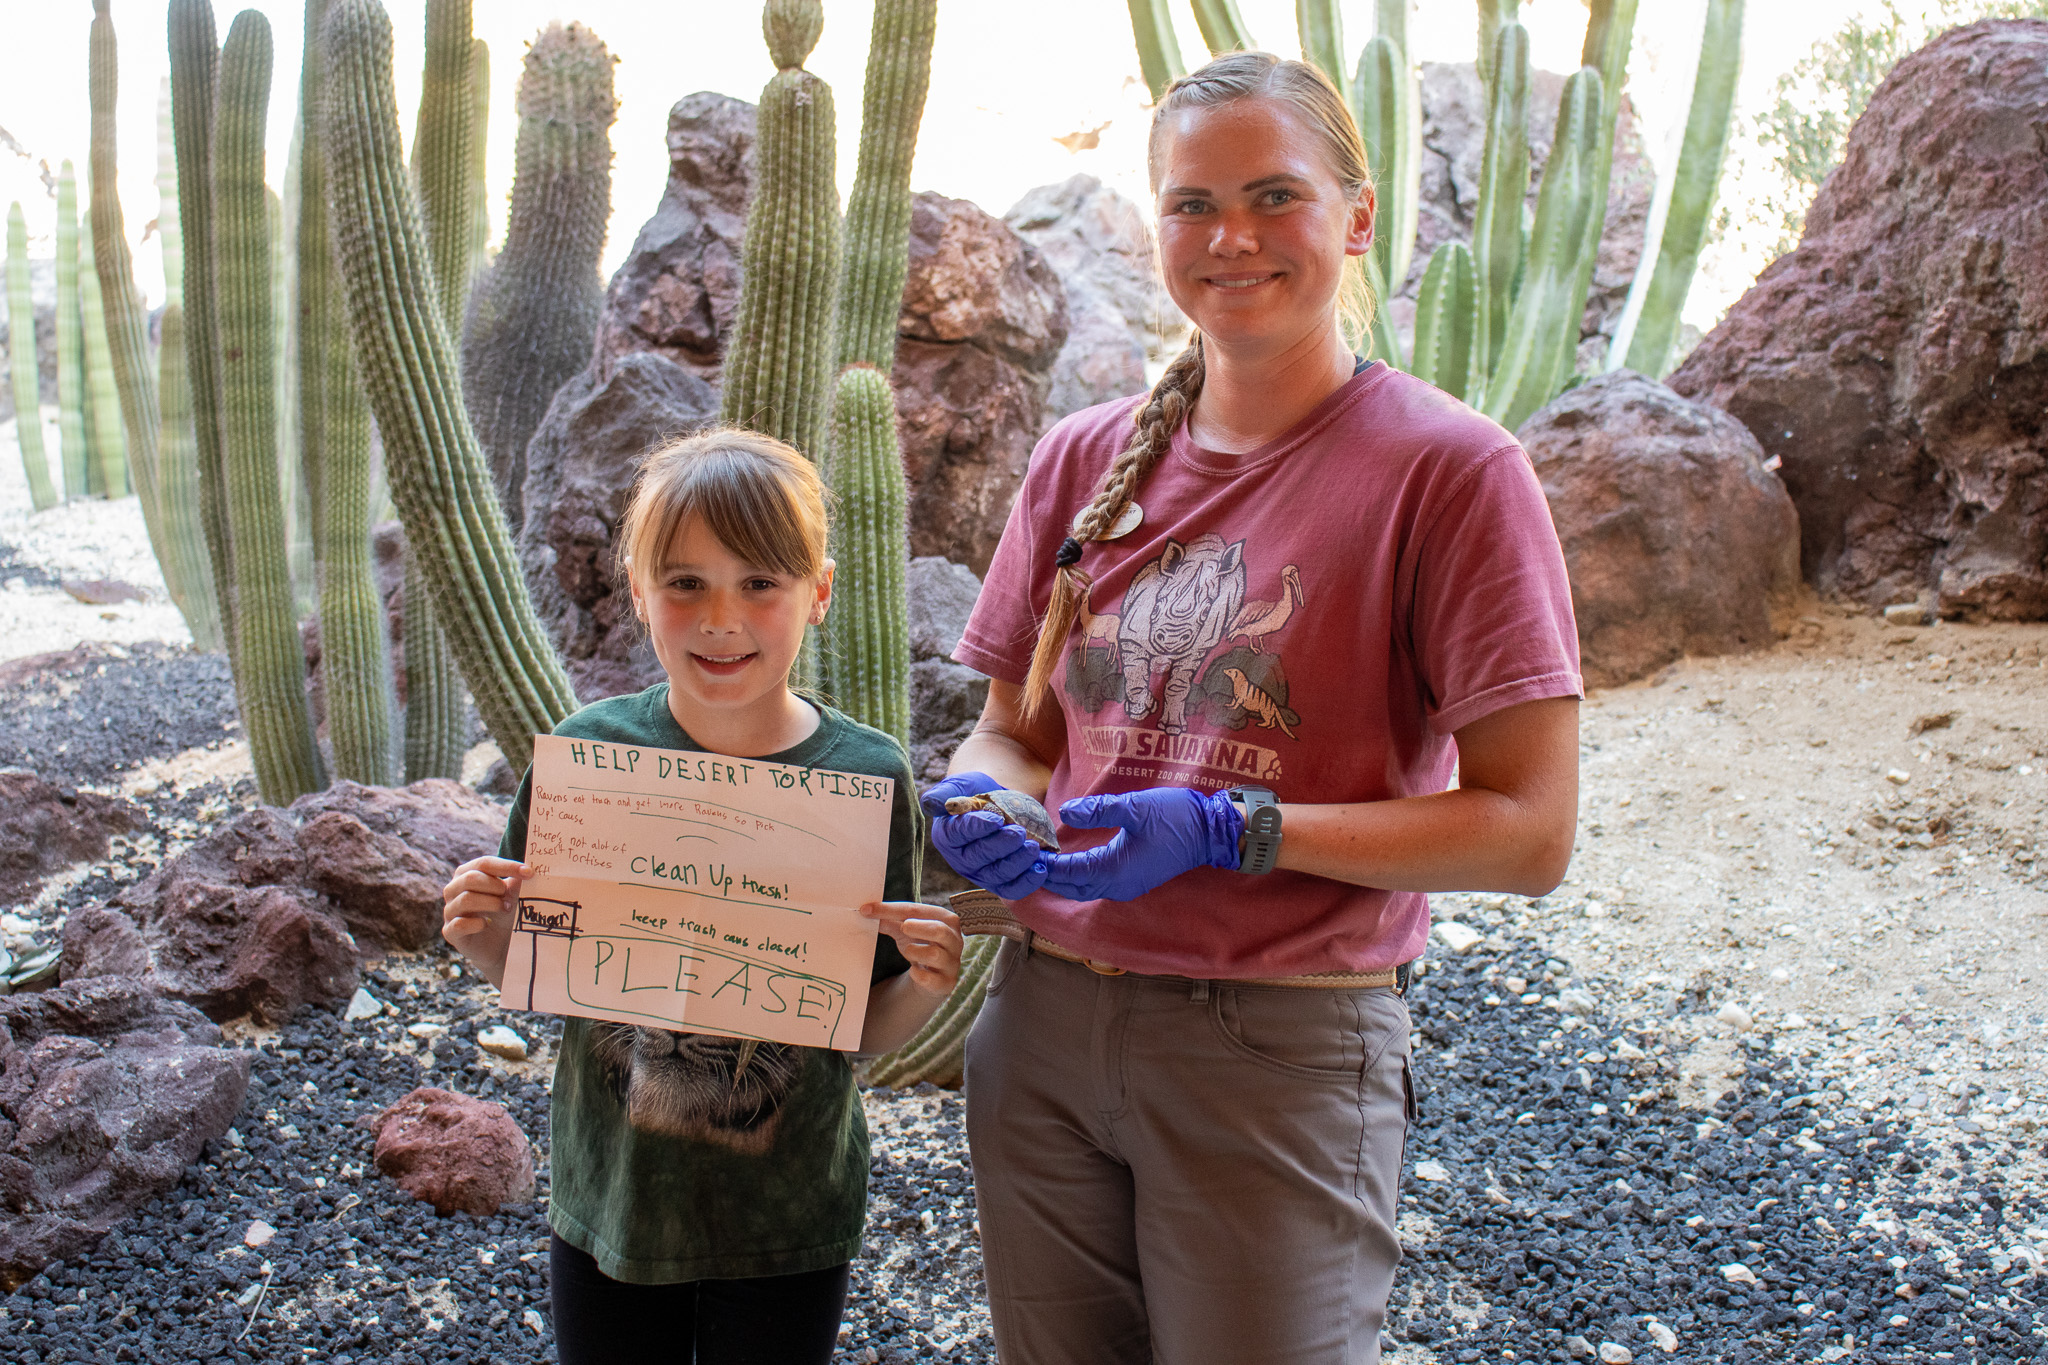 9-Year-Old Conservationist’s Goal of Saving The Desert Tortoise